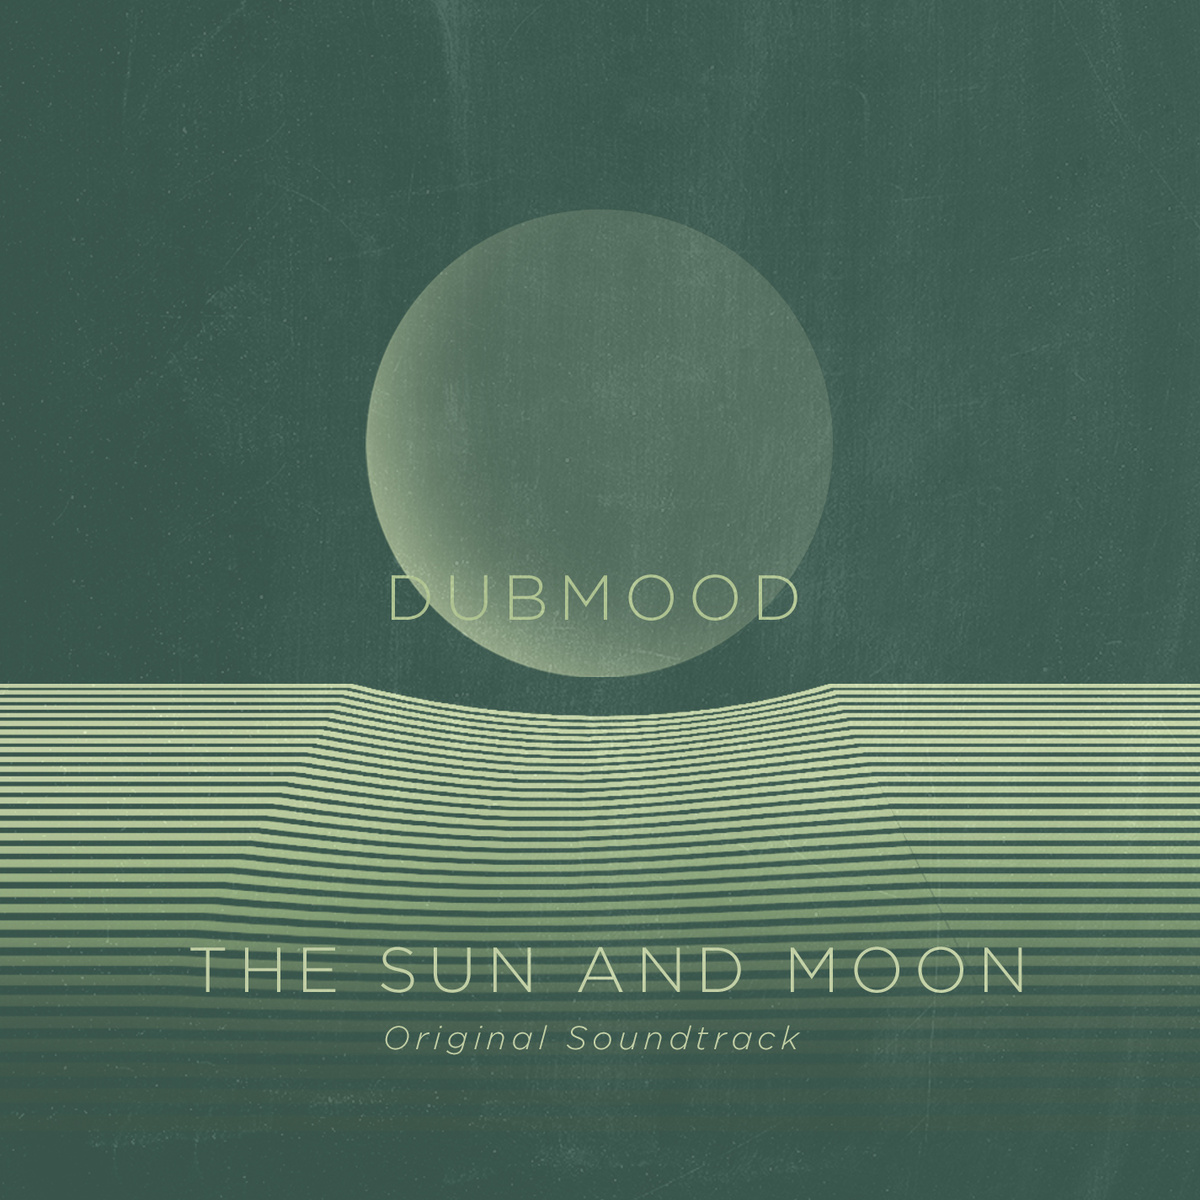 The Sun обложка. Sun and Moon игра. Dubmood. Mooned soundtrack